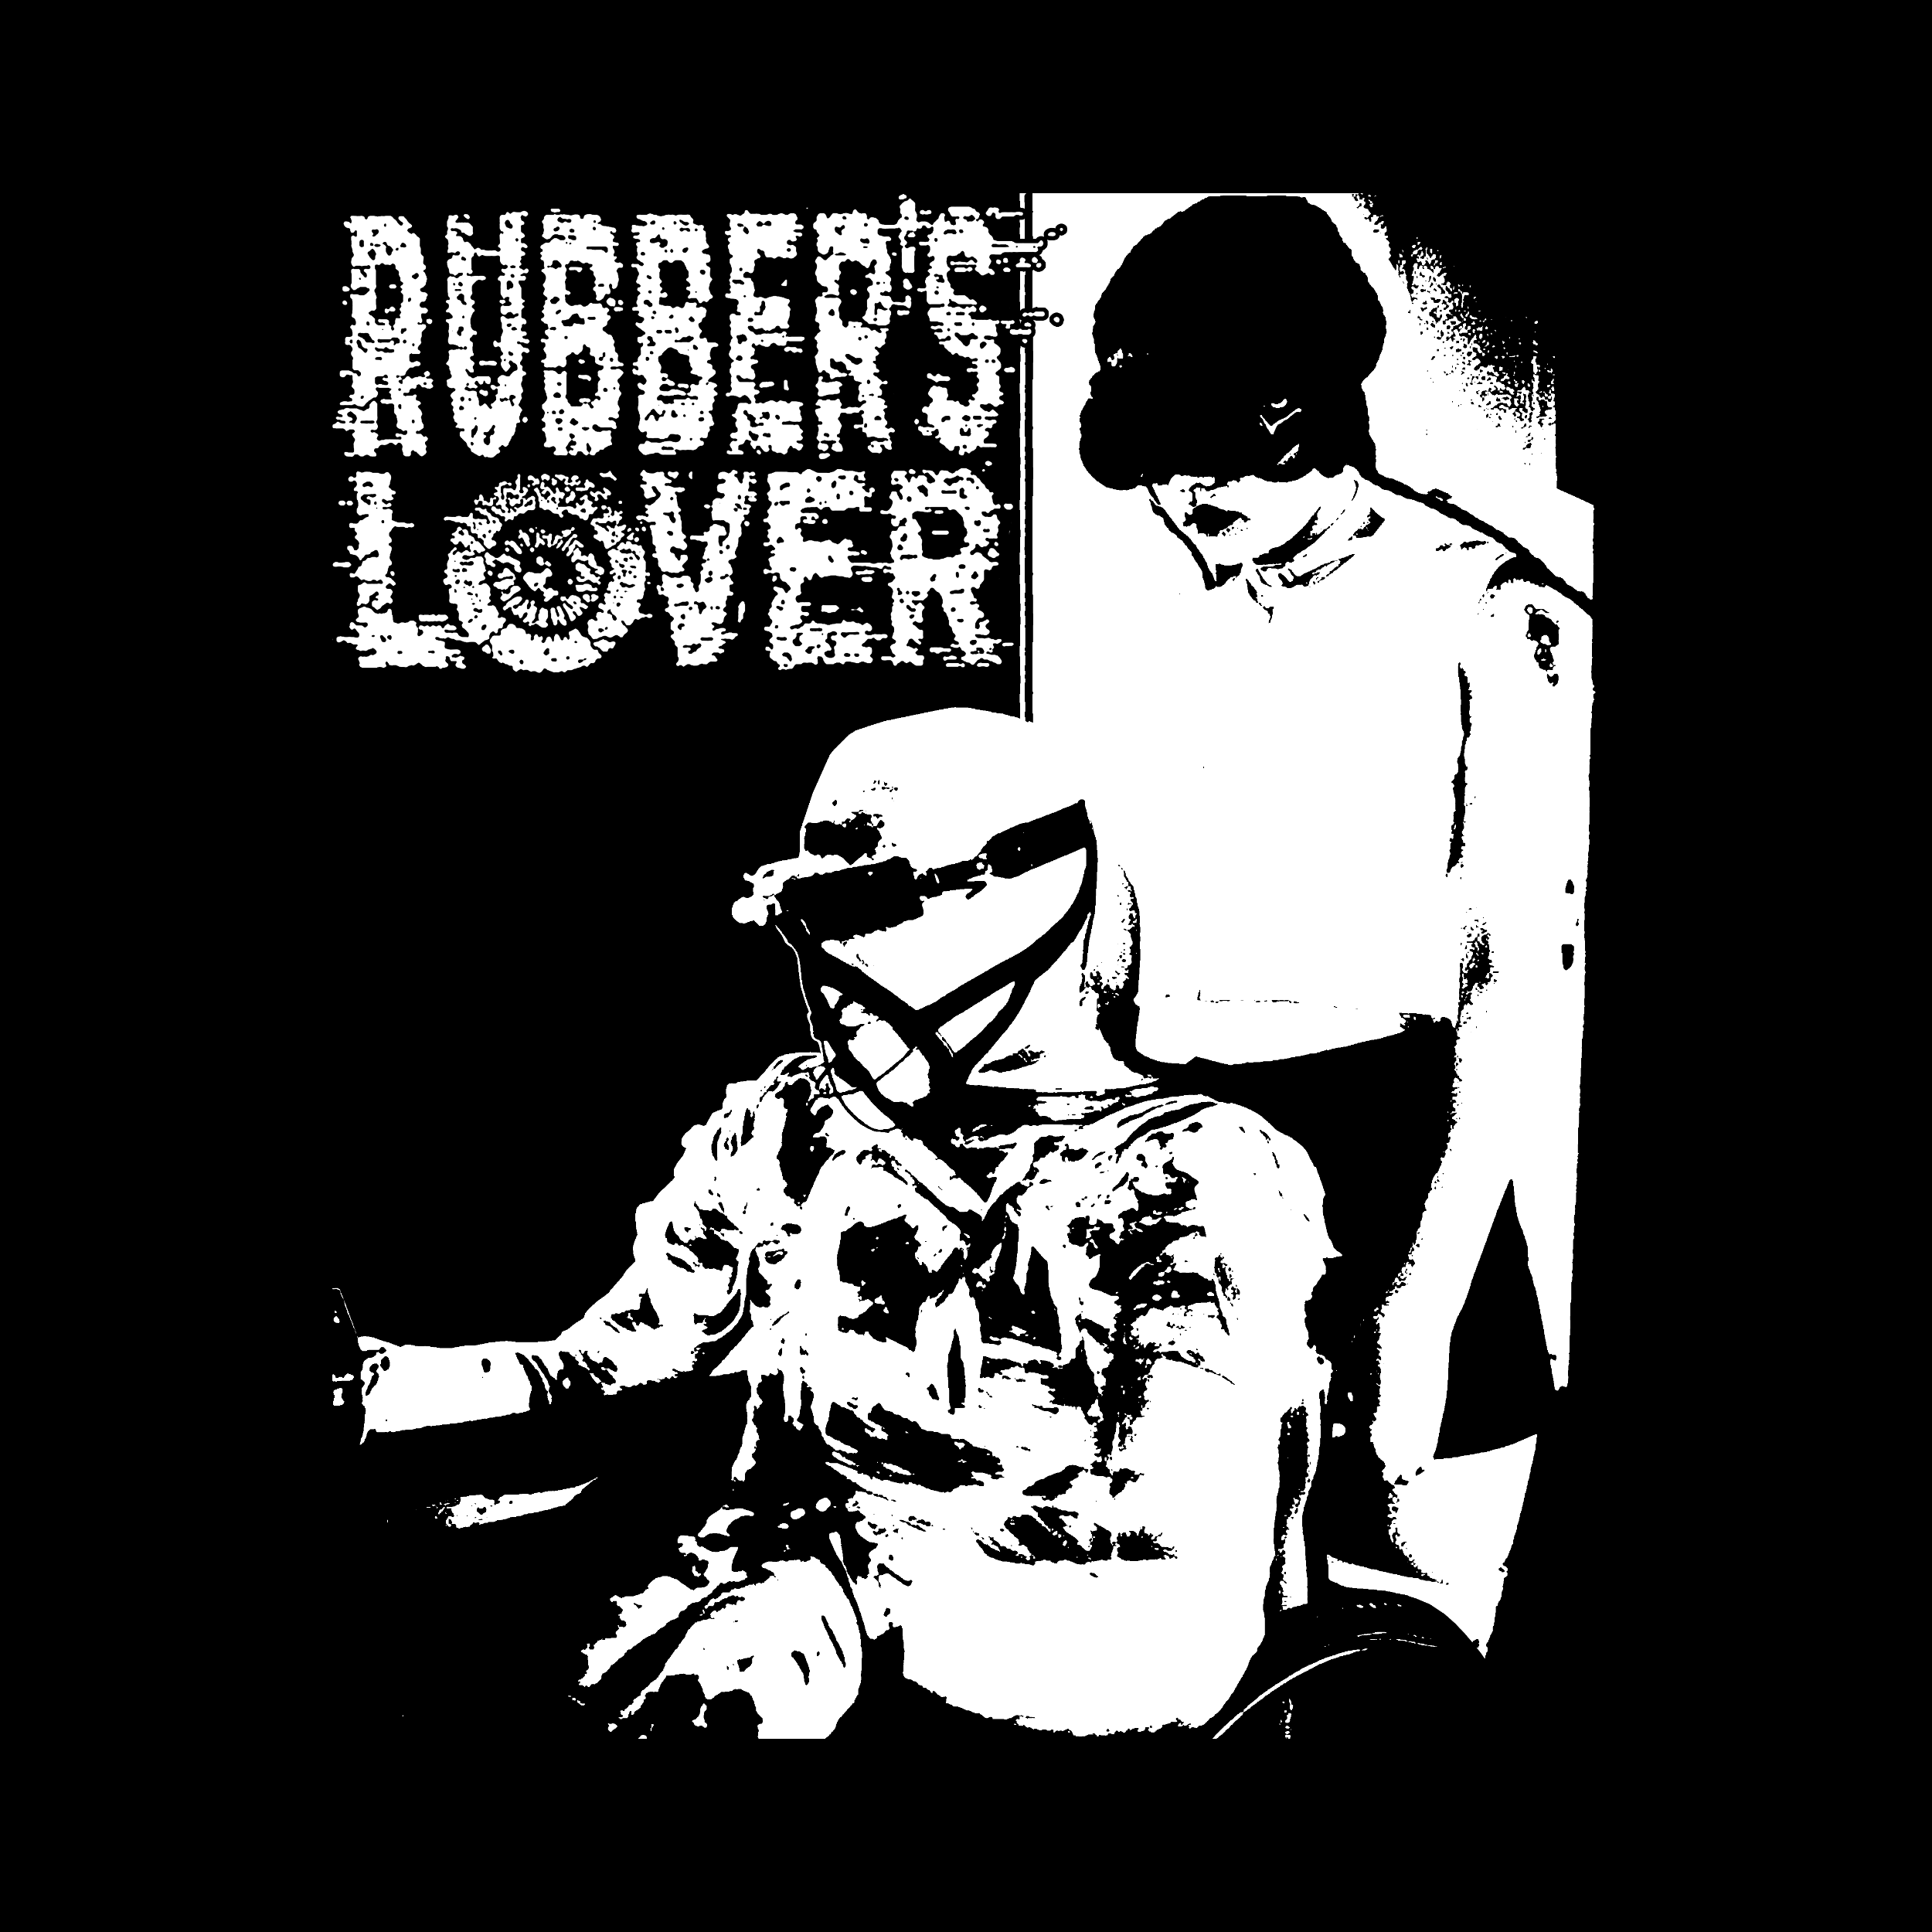 Rubbers Lover Film Premium Tee